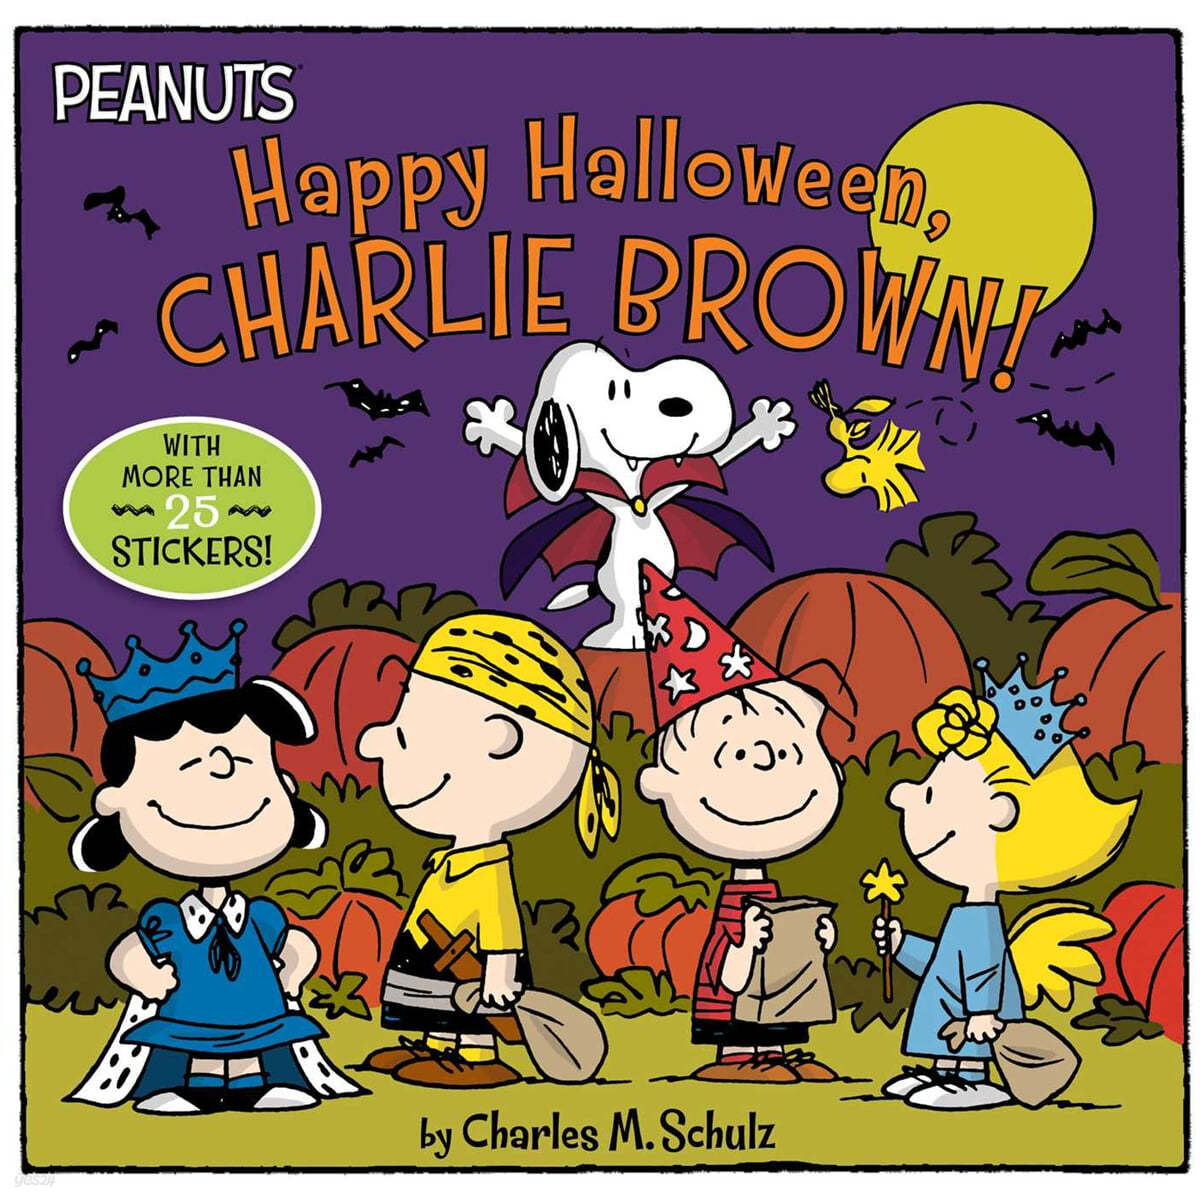 Happy Halloween Charlie Brown!